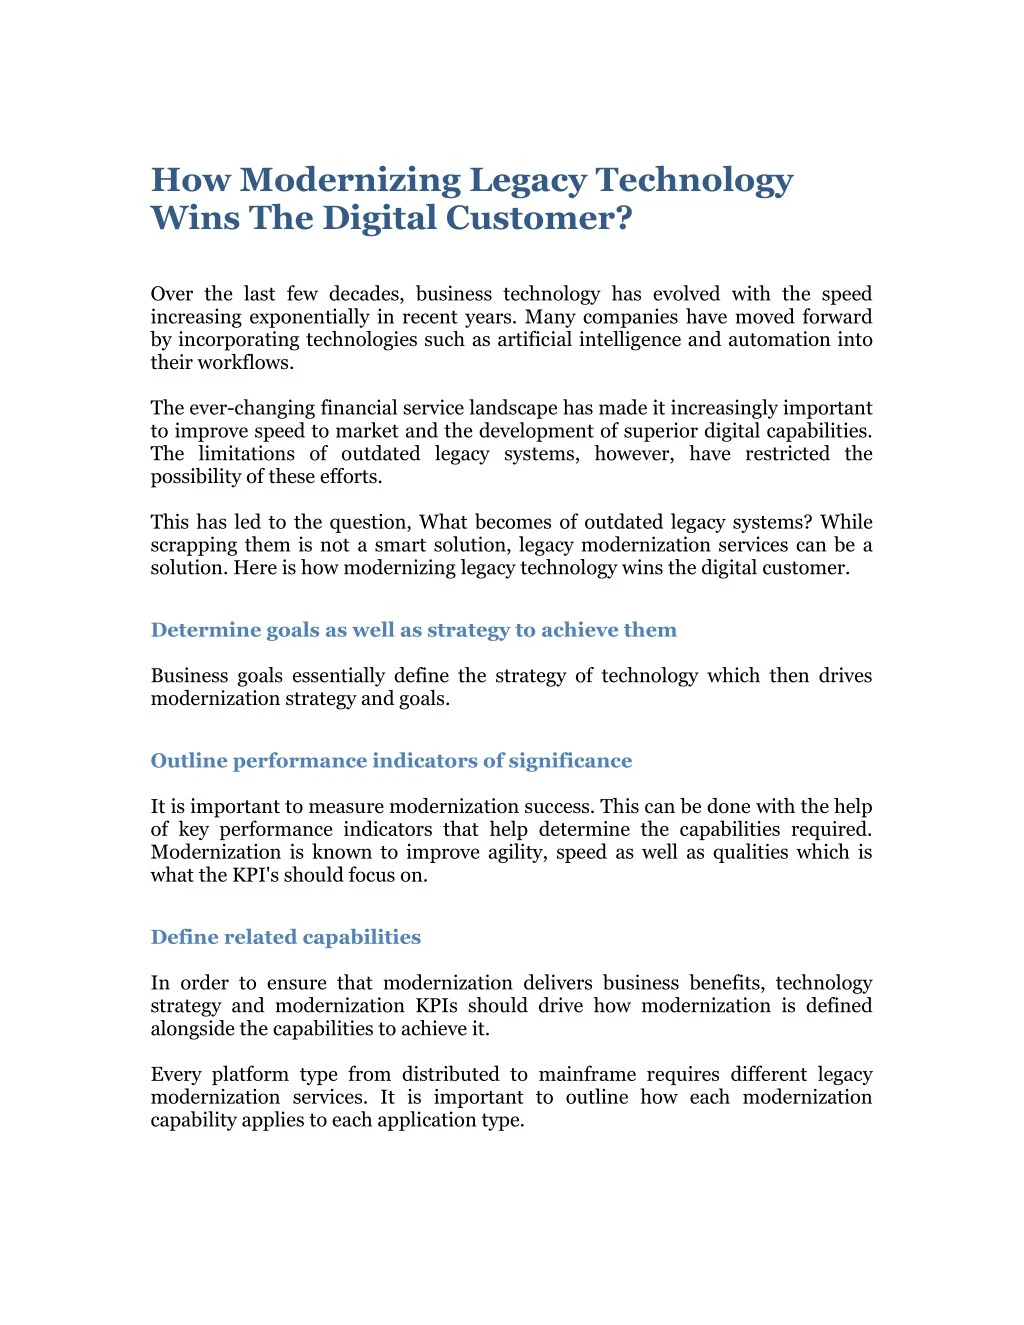 how modernizing legacy technology wins